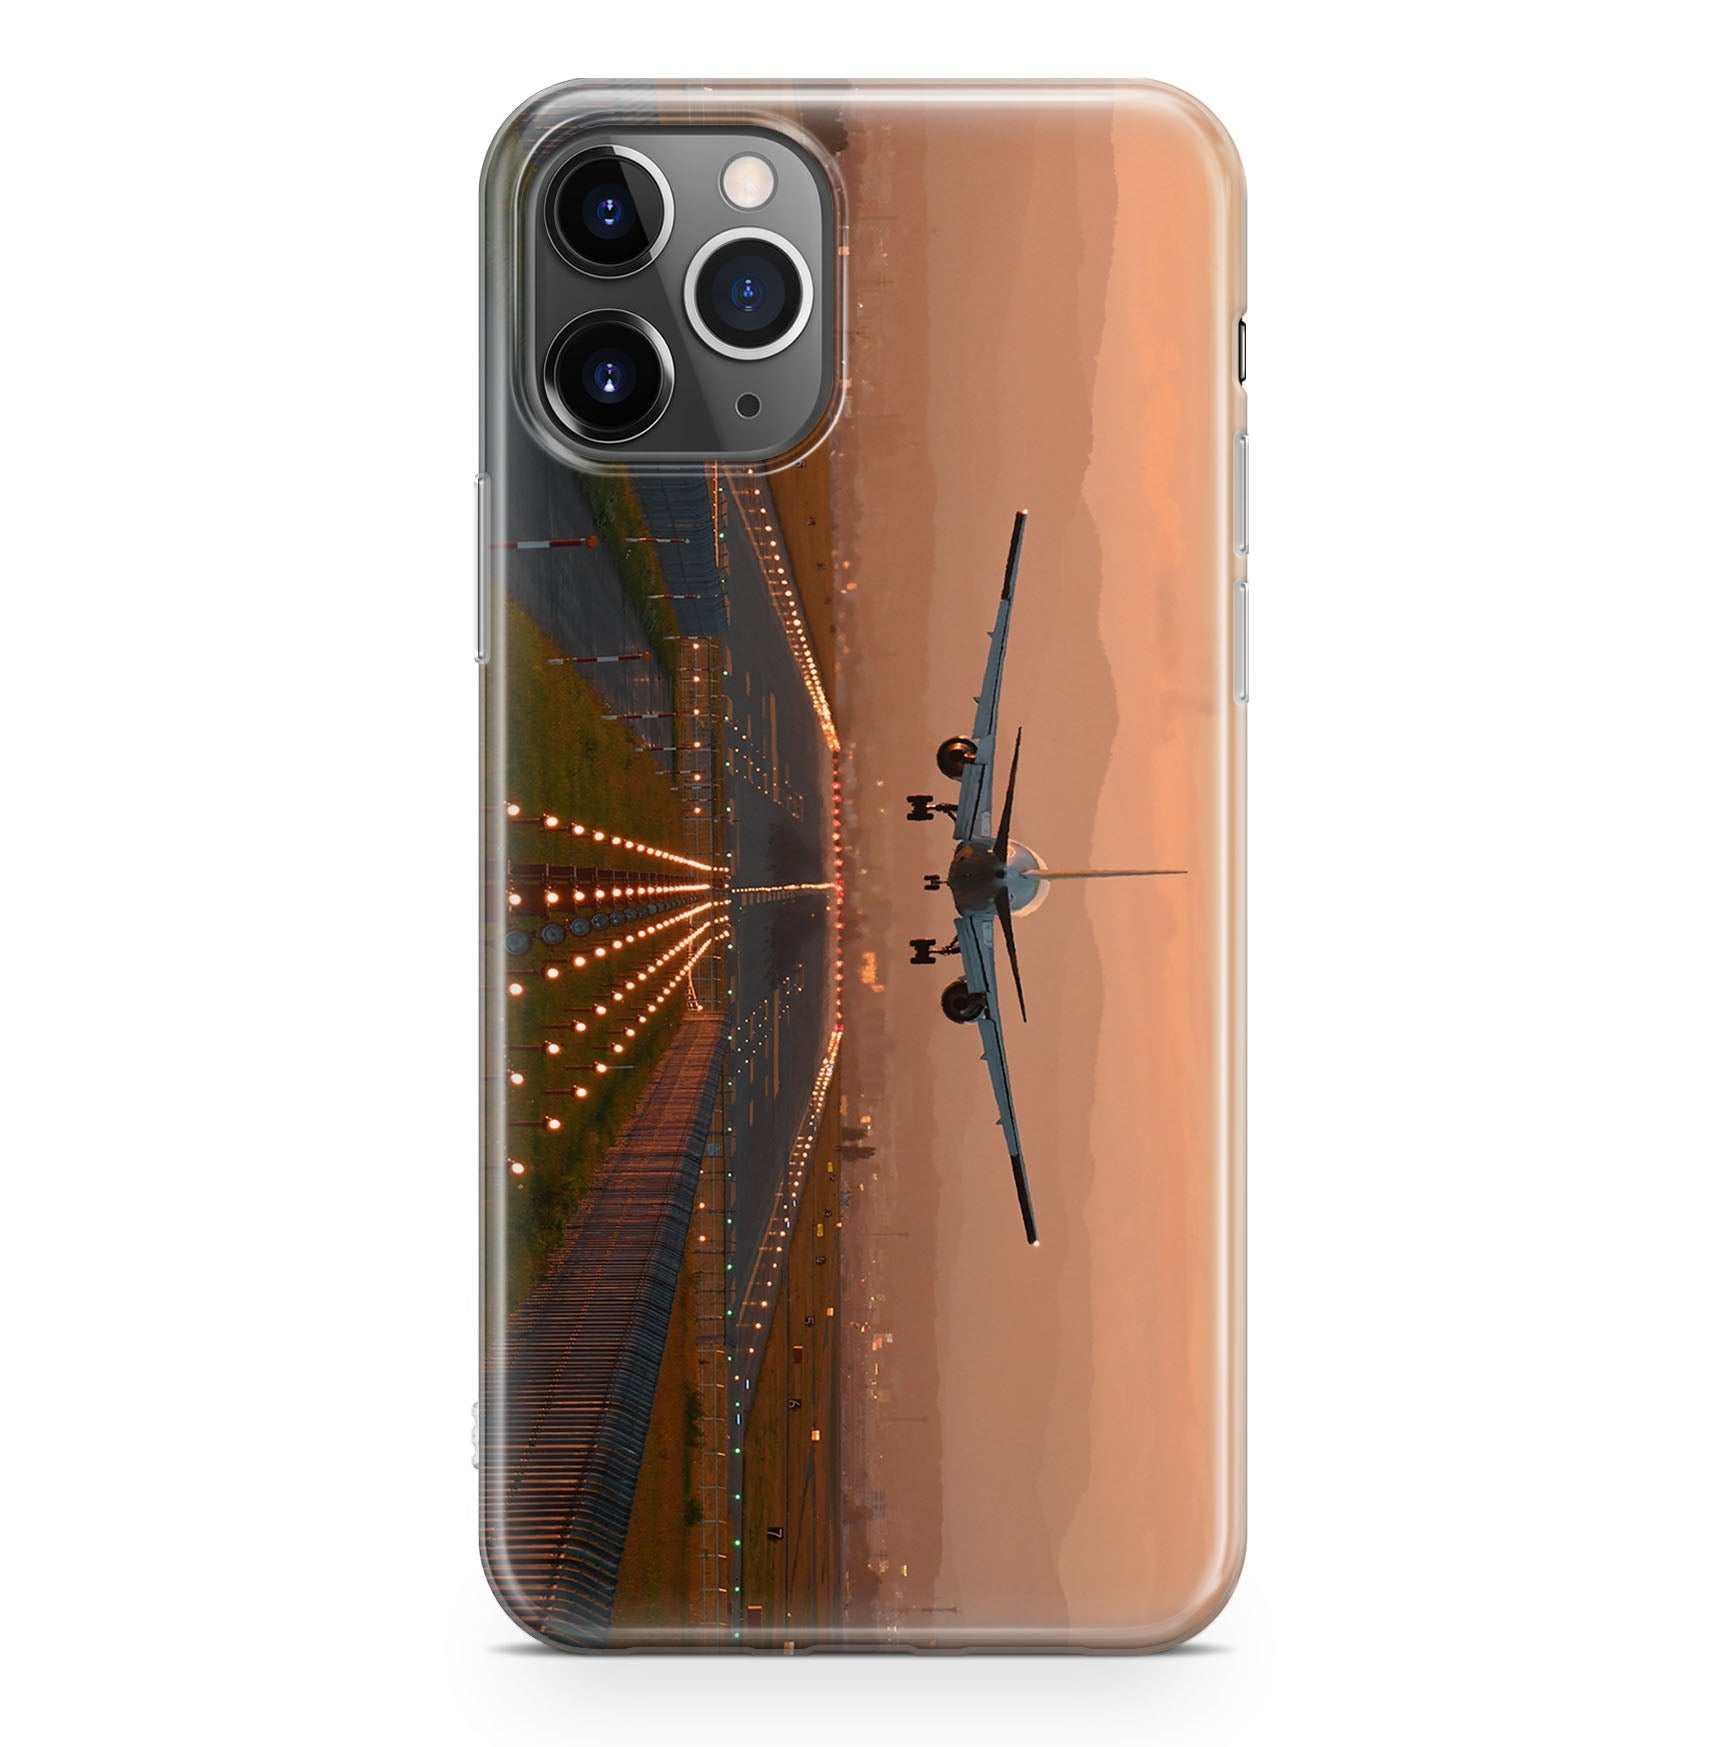 Super Cool Landing During Sunset Designed iPhone Cases